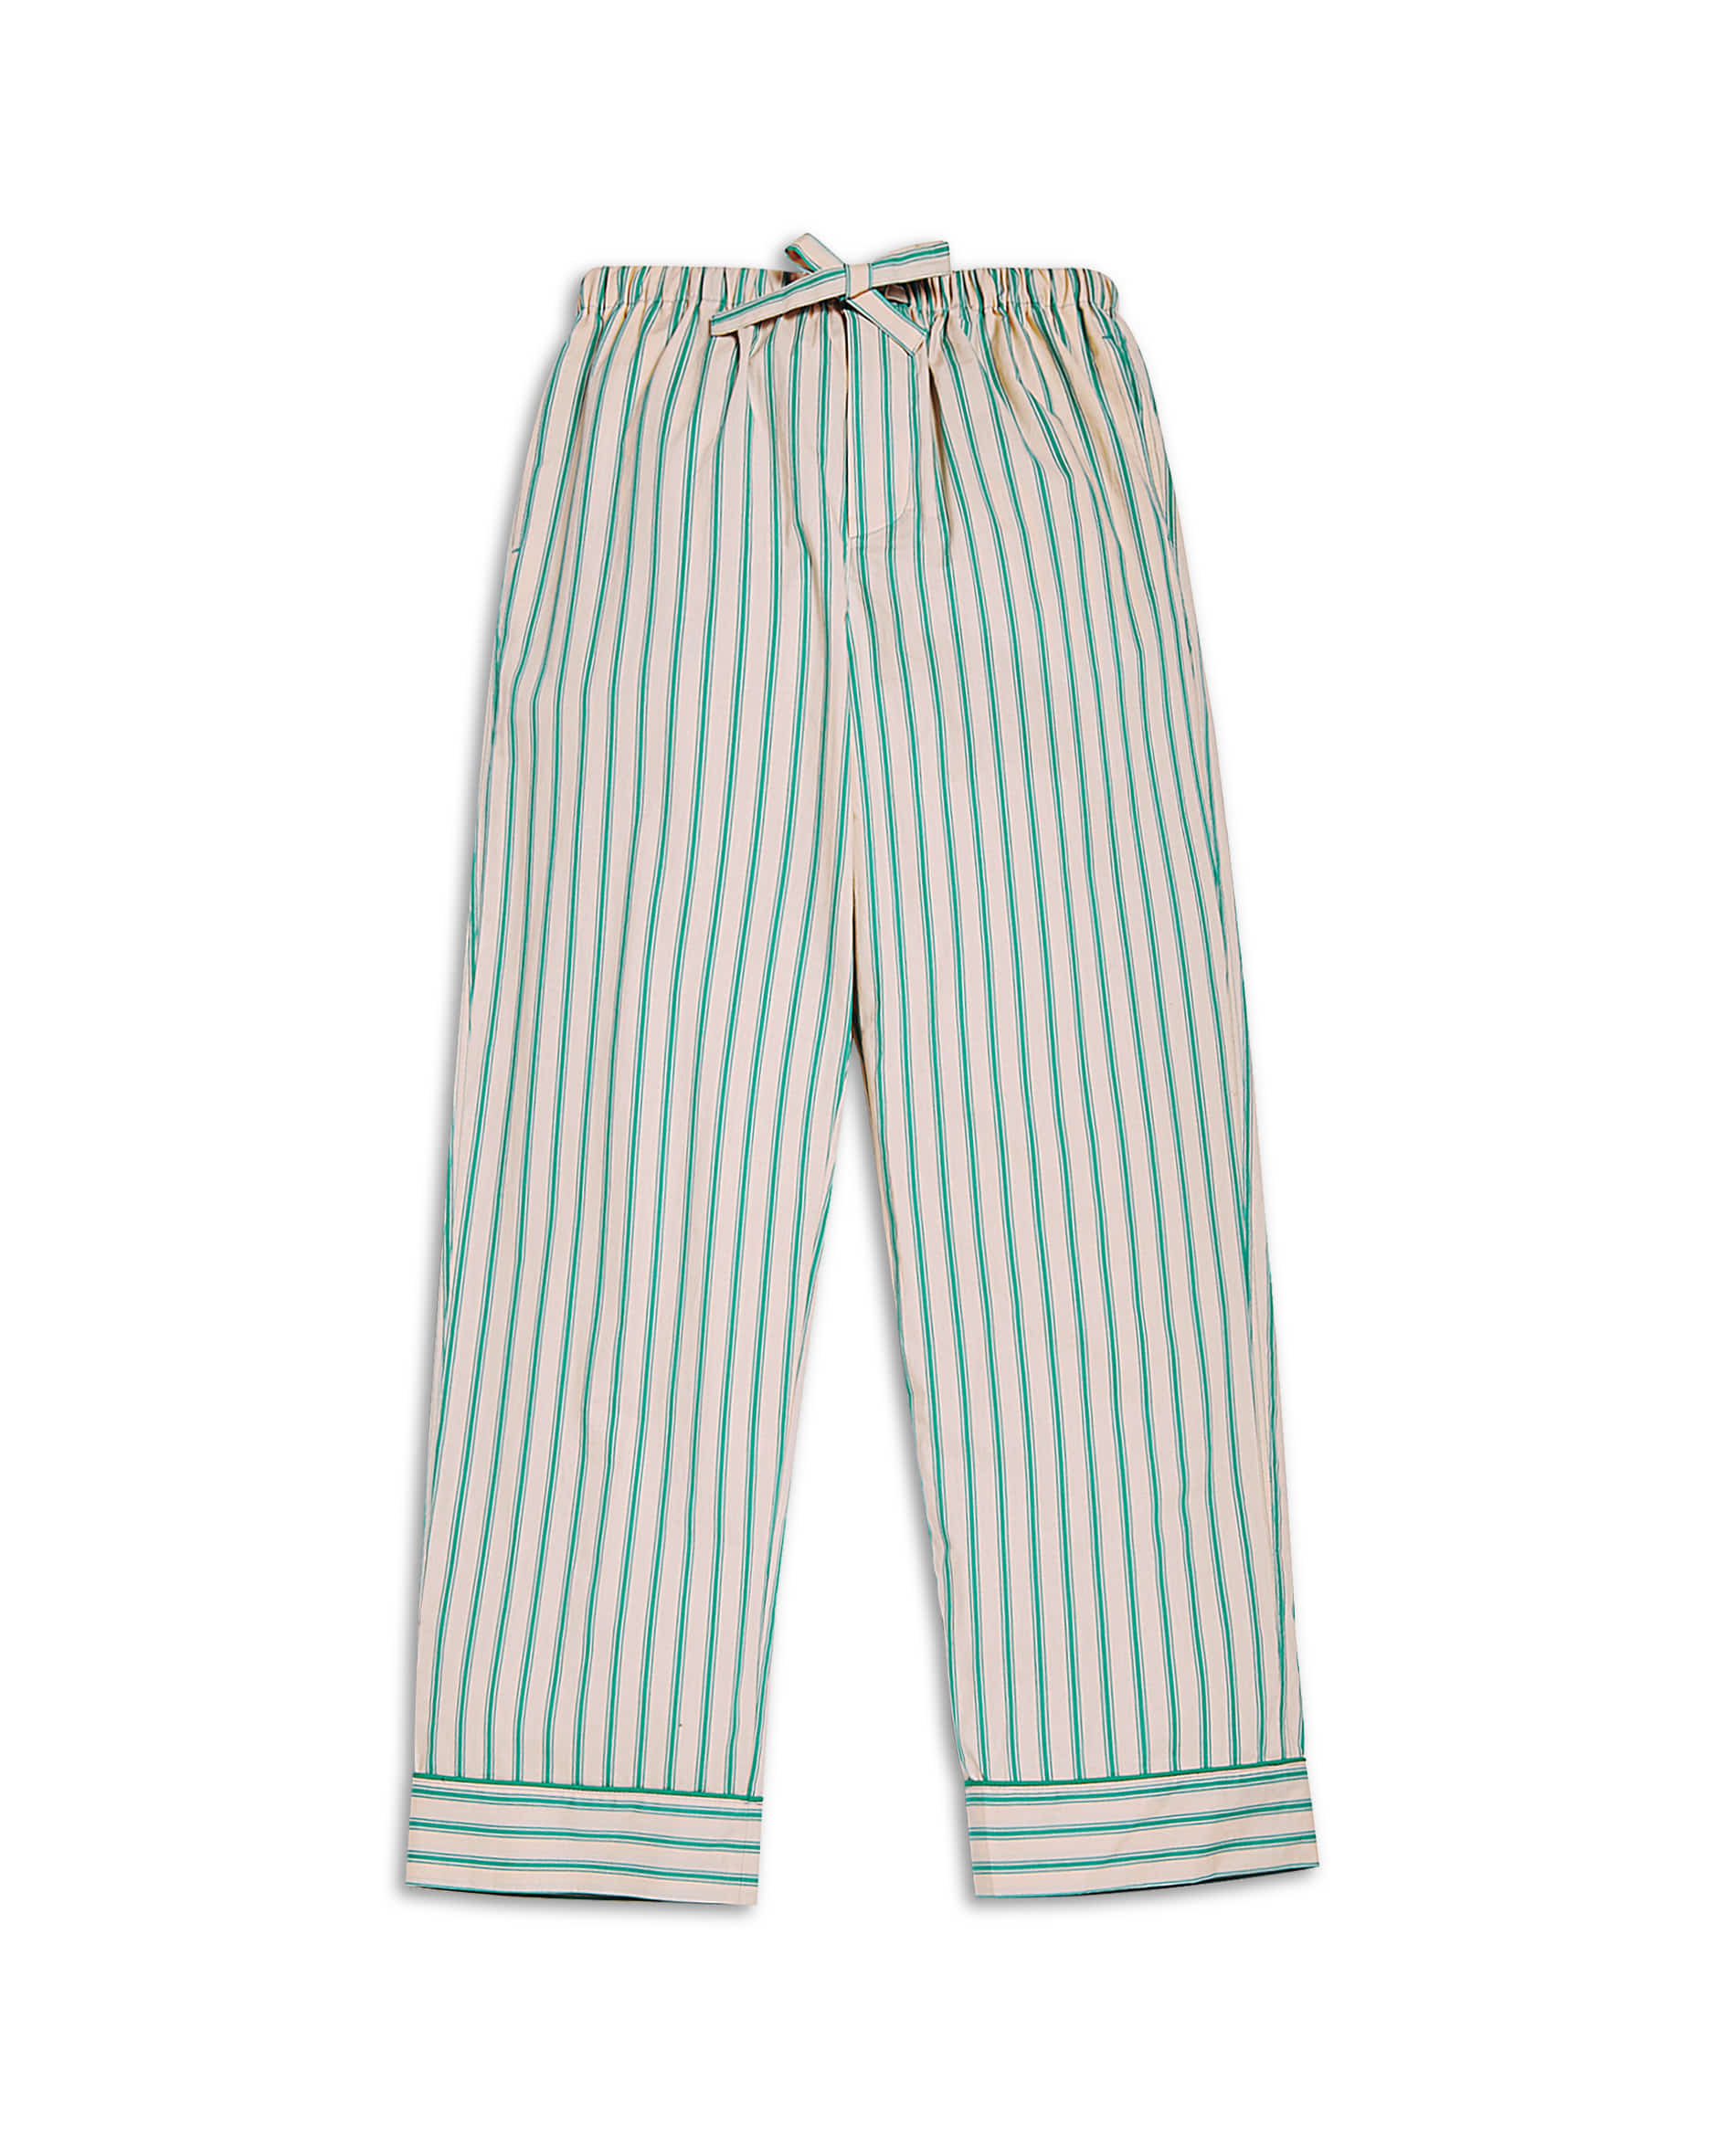 Chilling Stripe Pajama Set (Green)